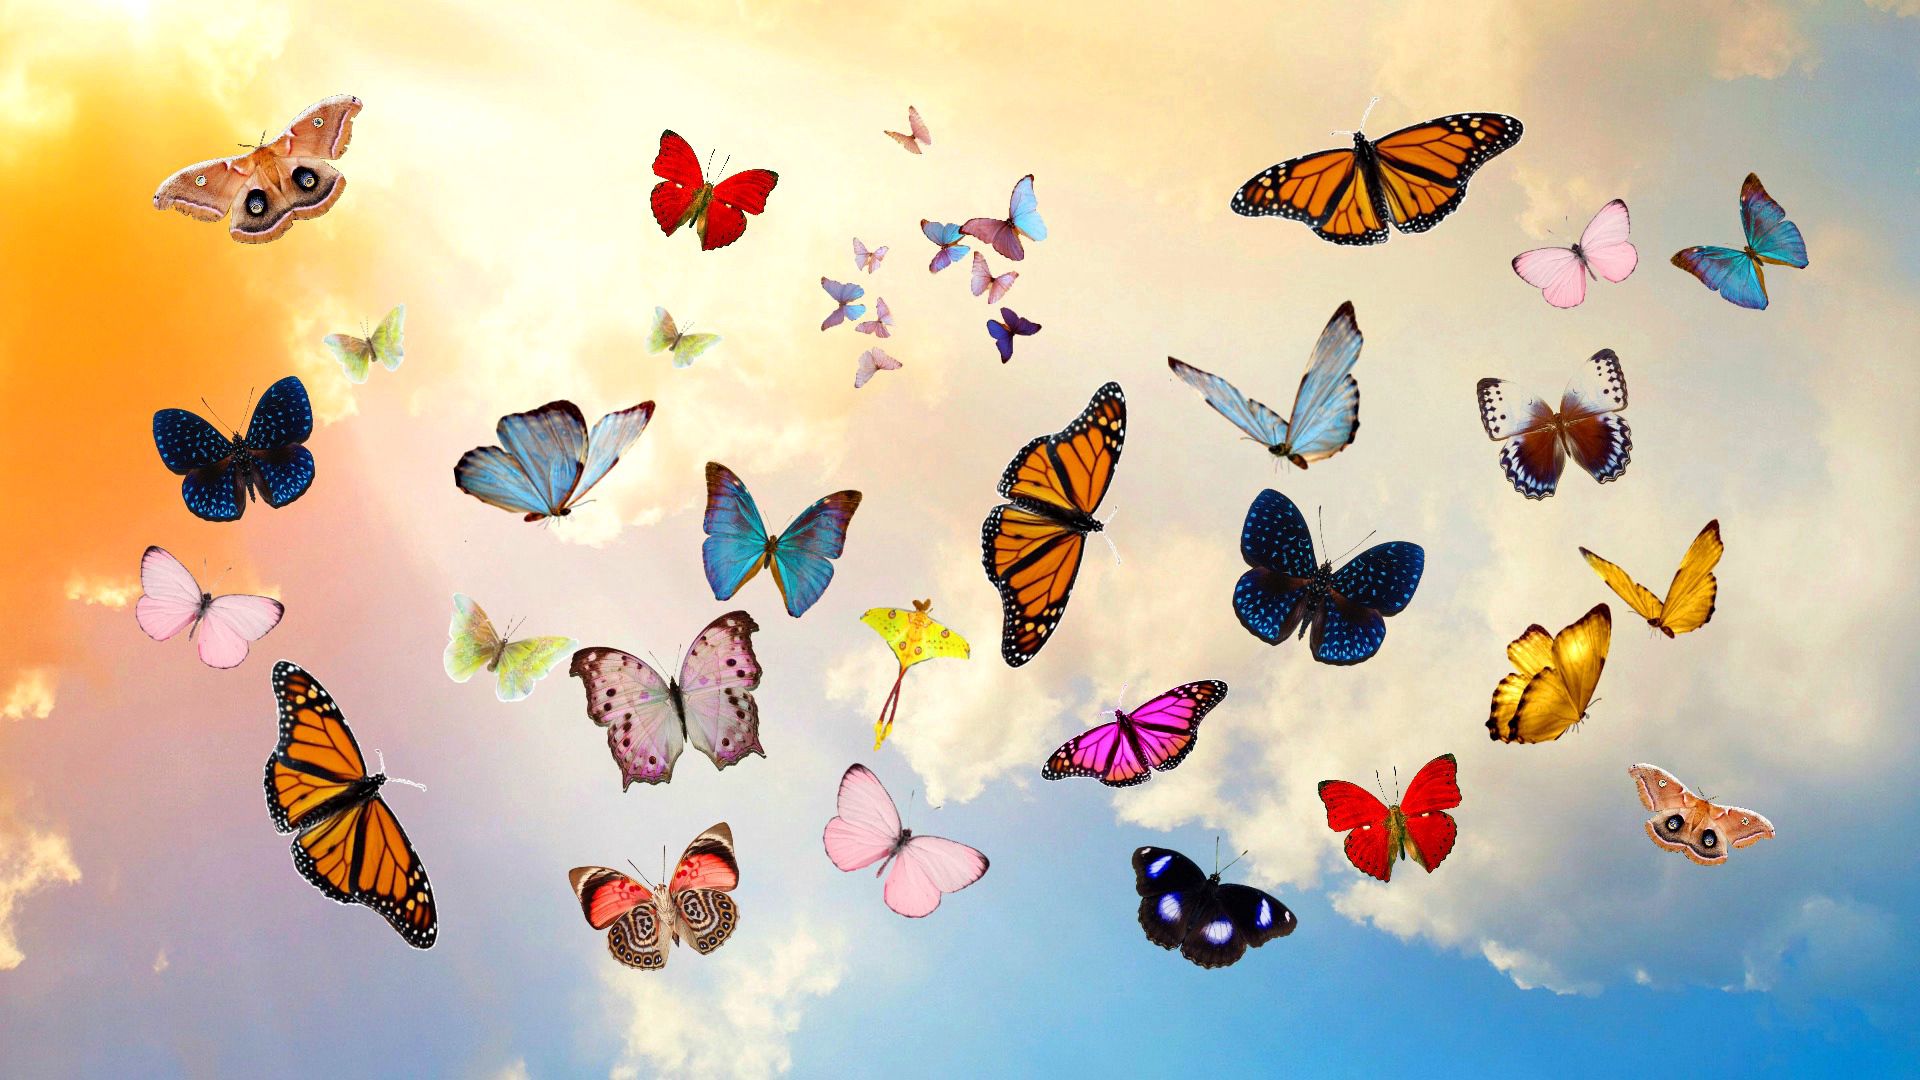 miscellanea, photoshop, butterflies, sky, miscellaneous, collage